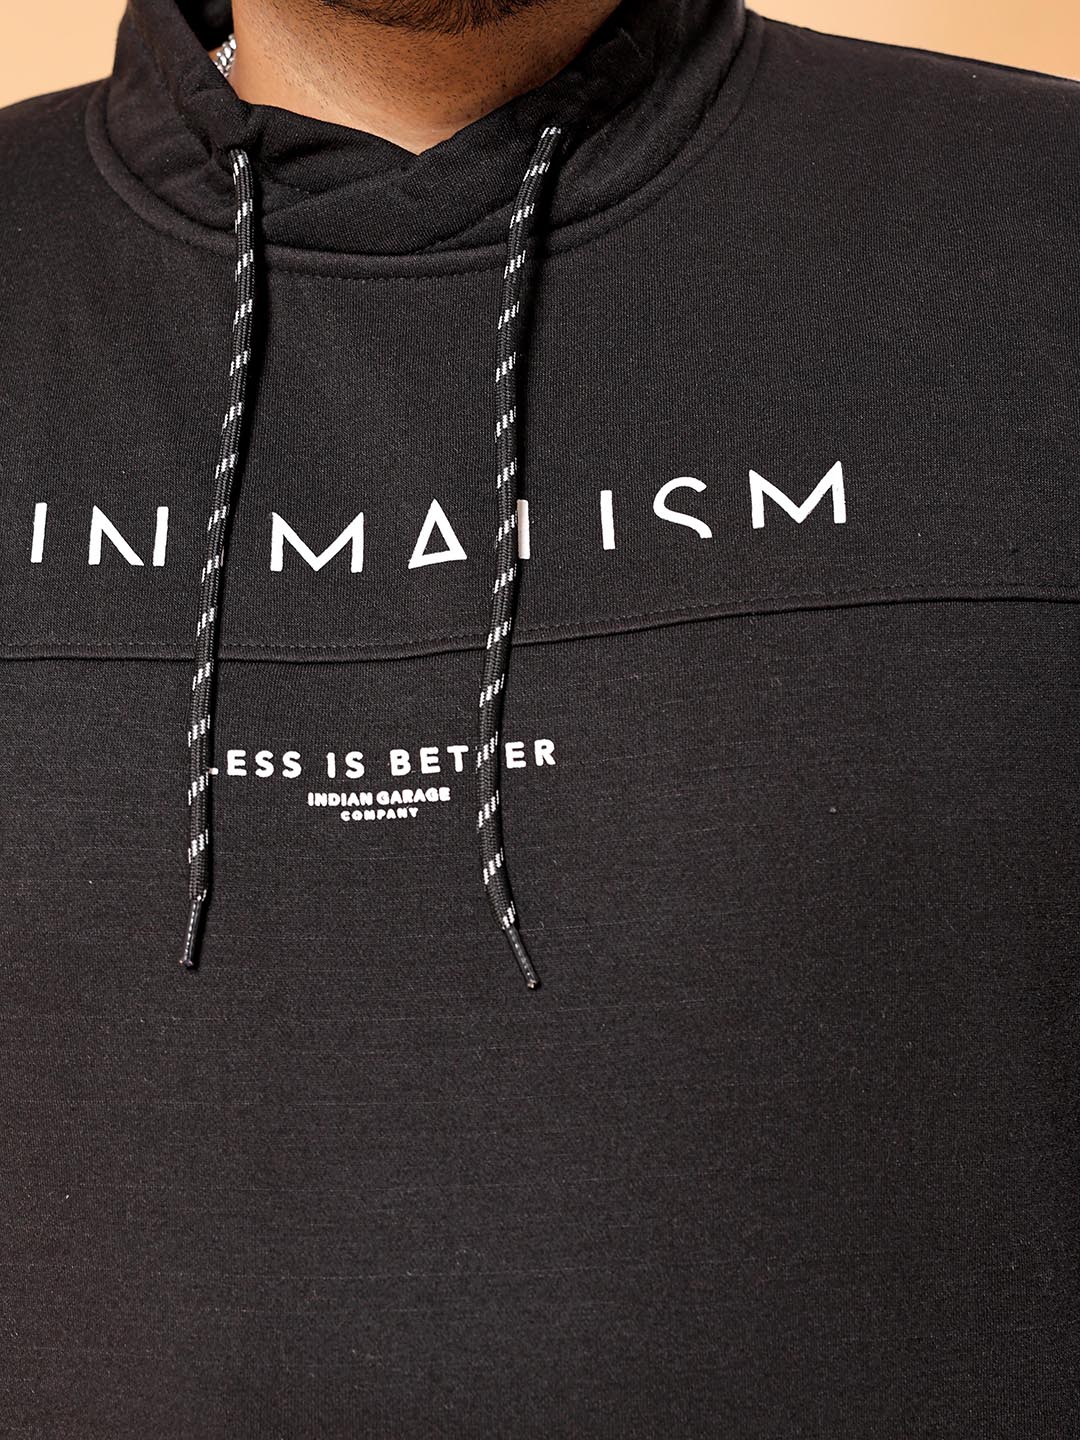 Shop Men Printed Sweatshirts Online.